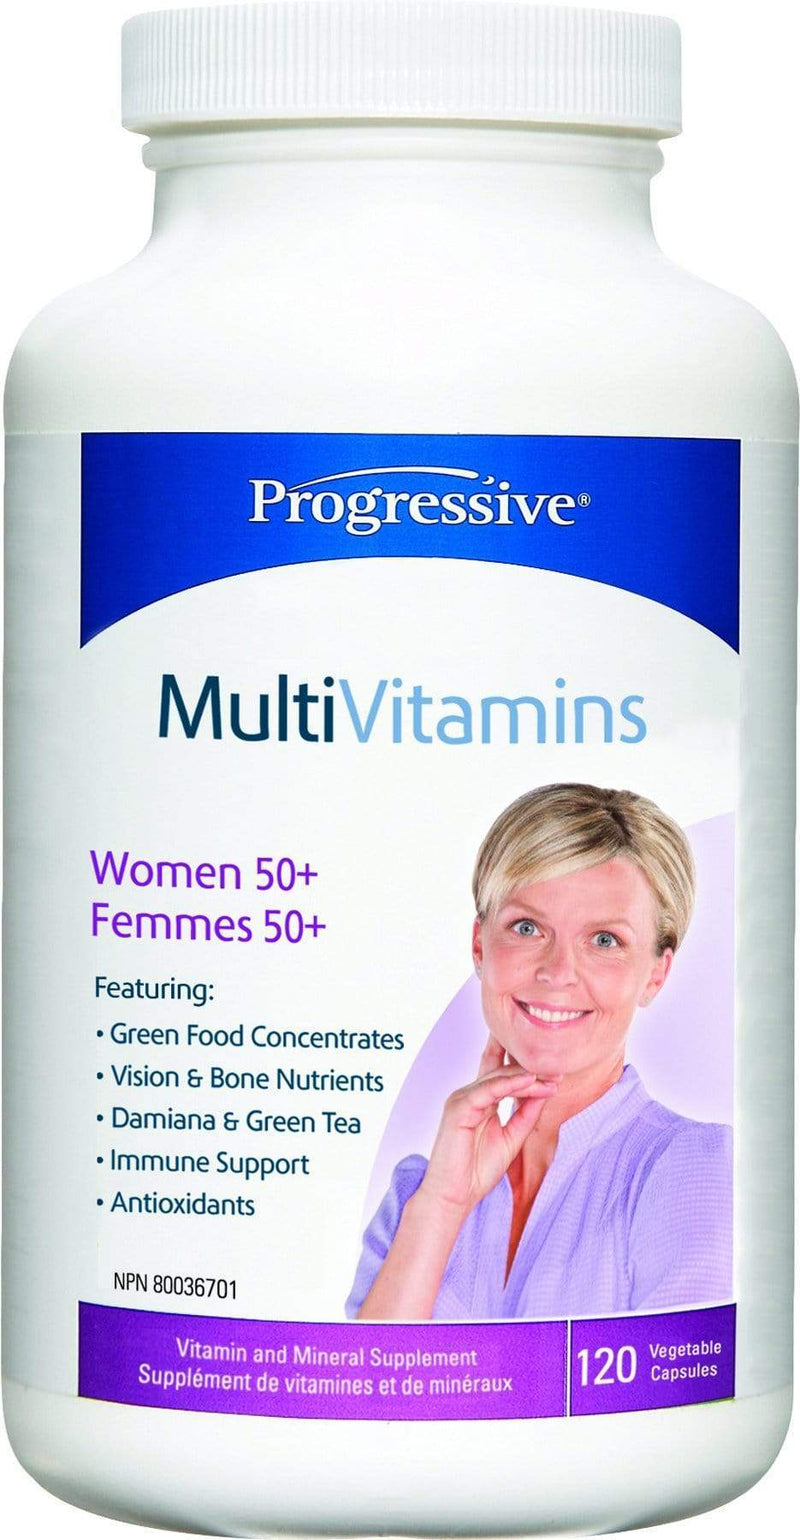 Progressive Multivitamins for Women 50+